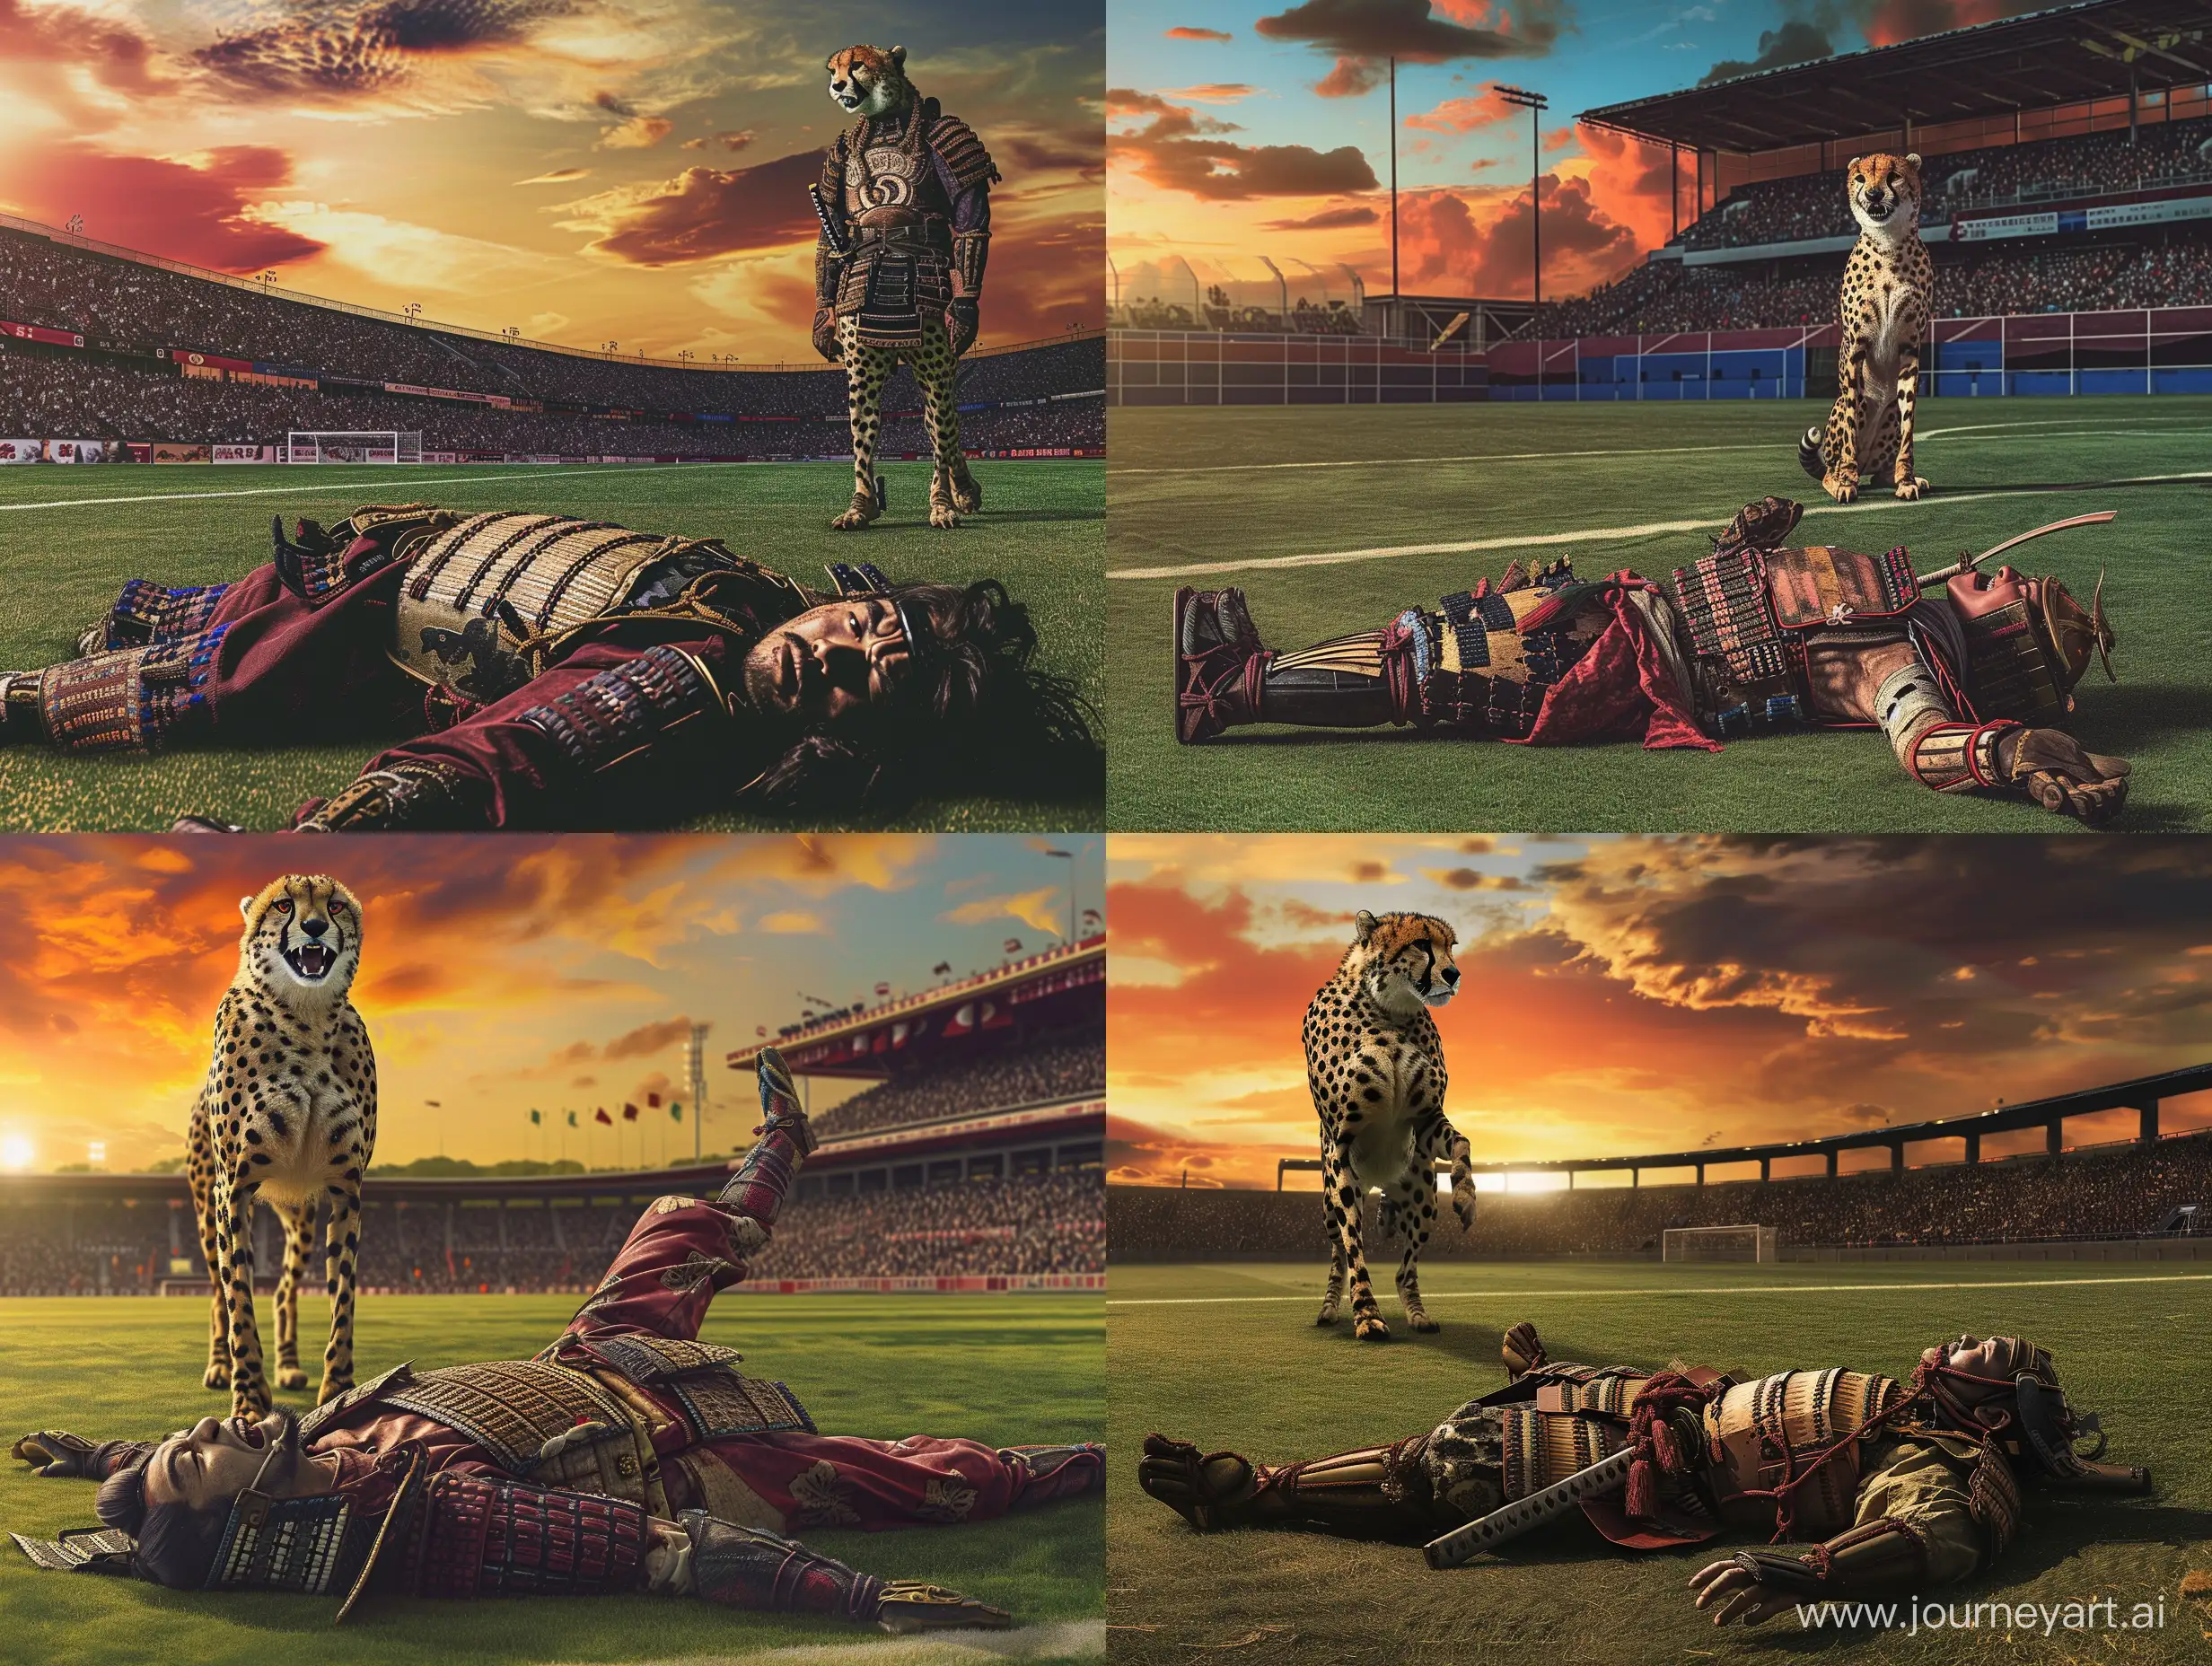 Dramatic-Battle-Defeated-Samurai-Faces-Fierce-Cheetah-on-Soccer-Field